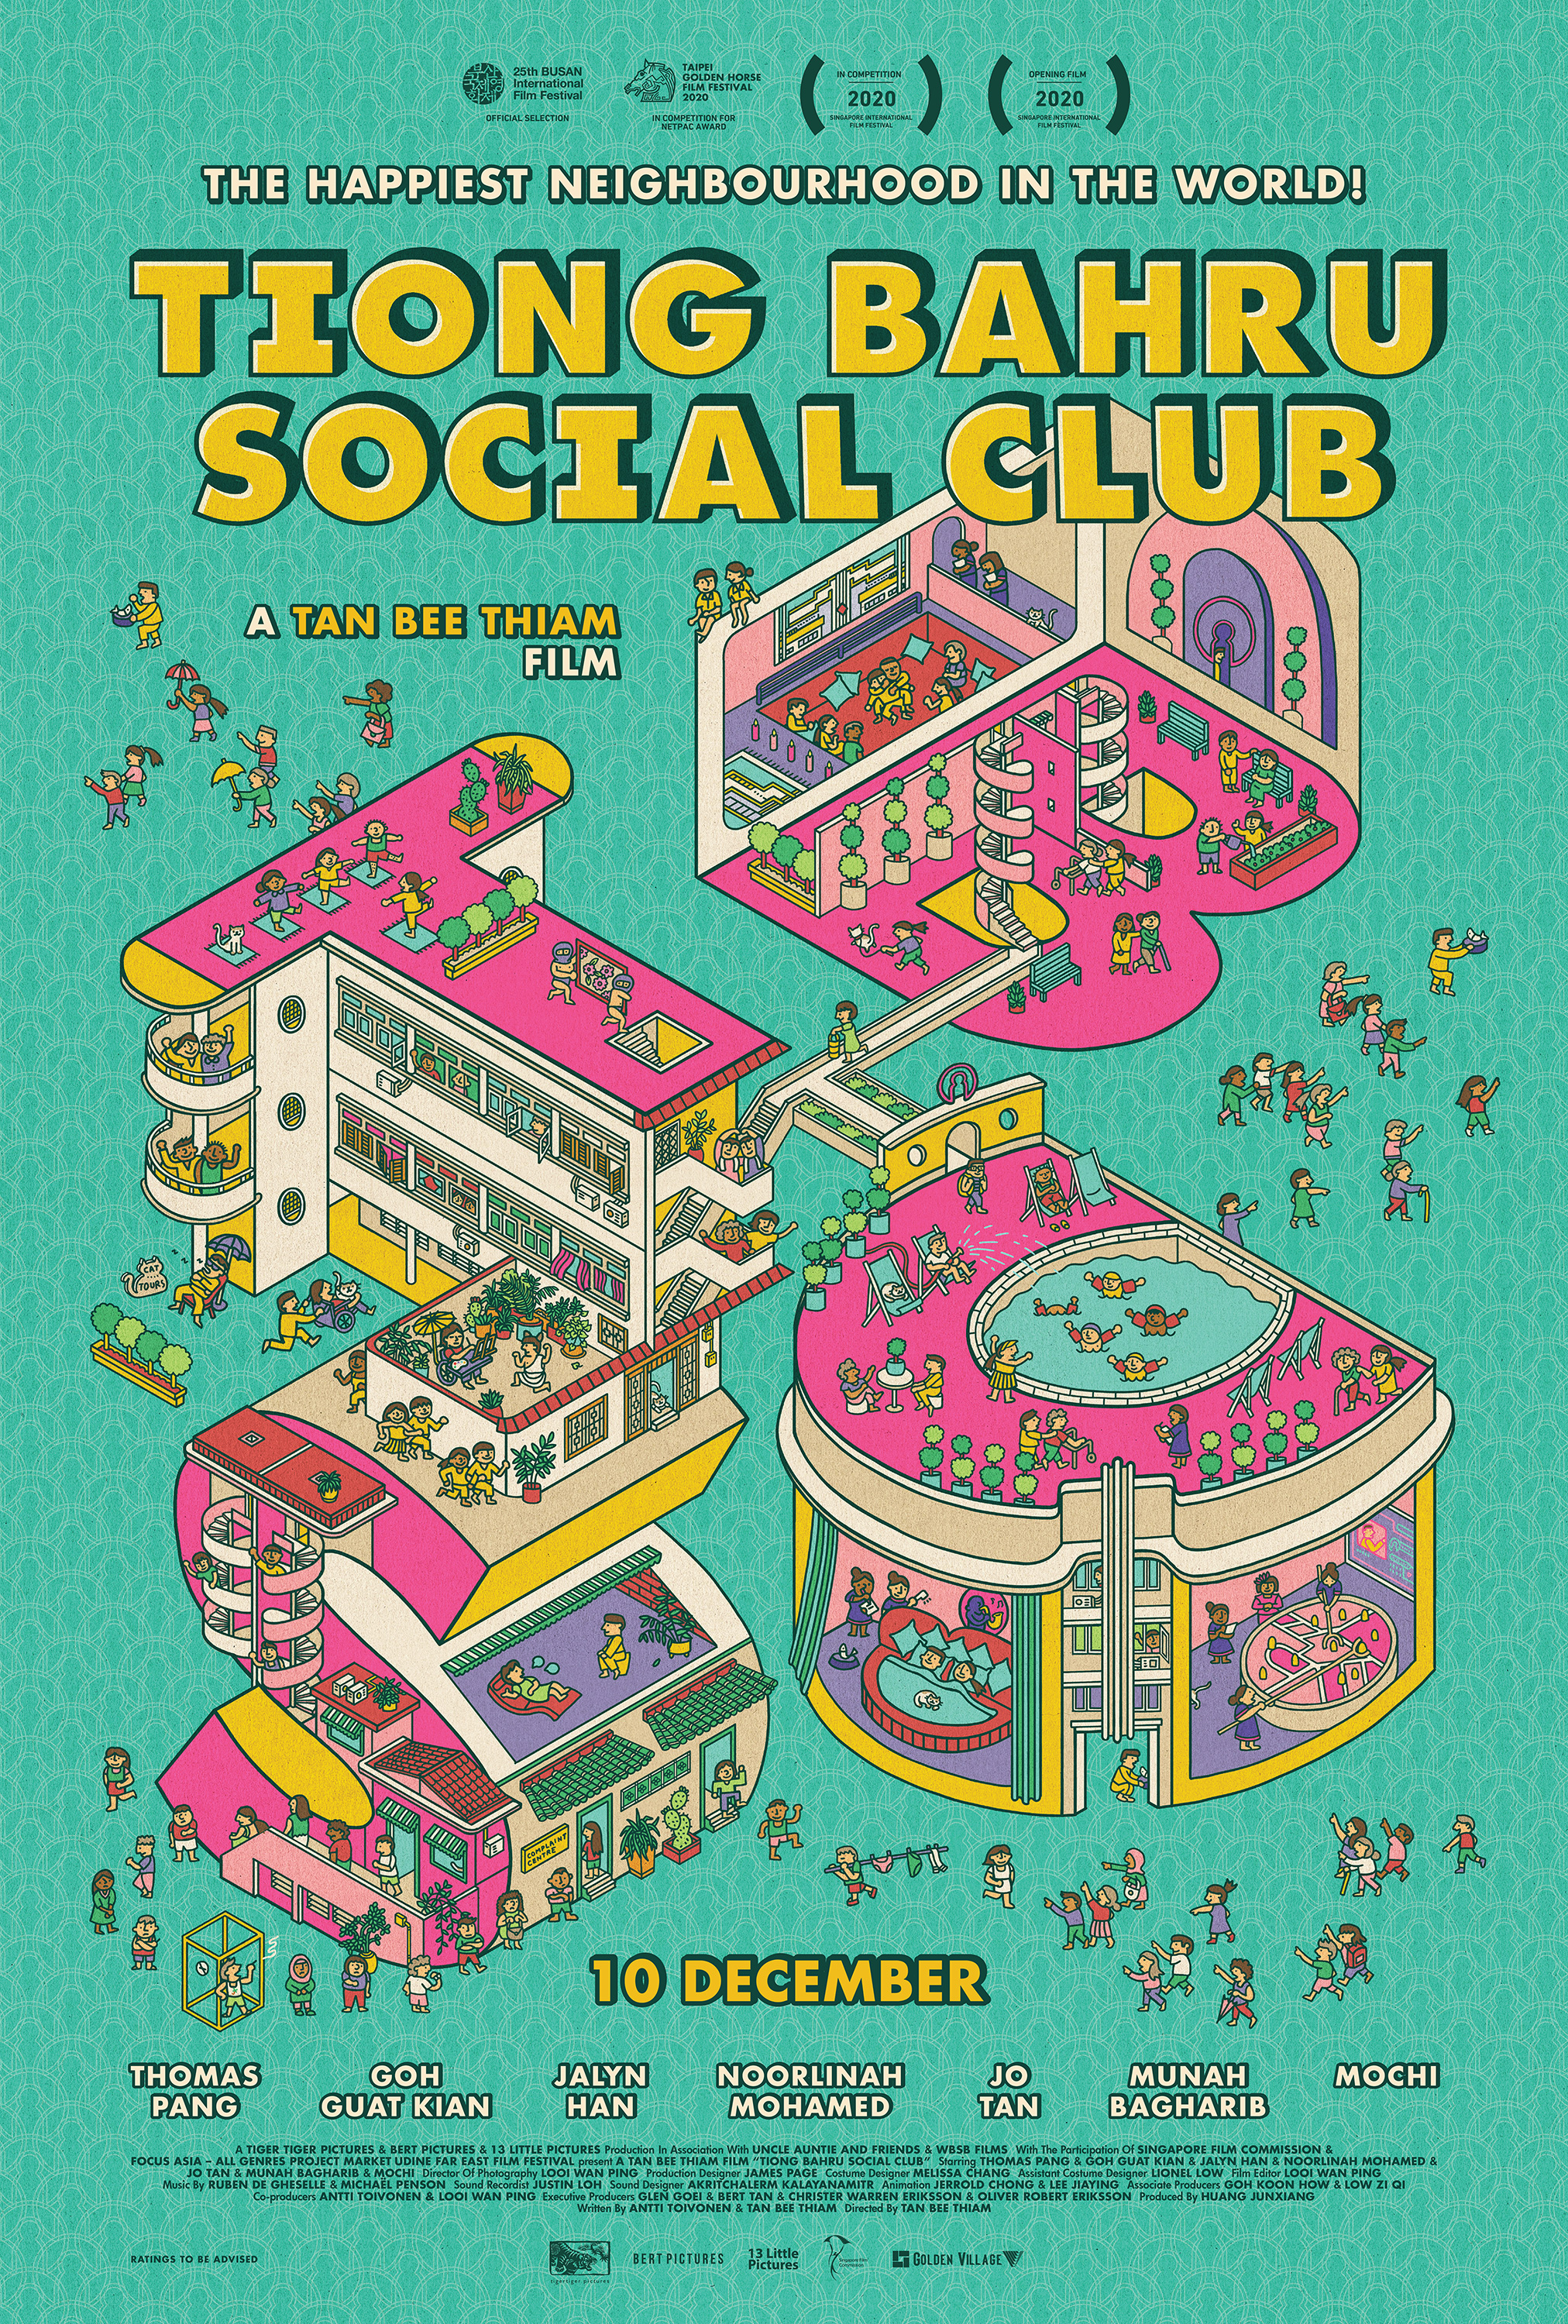 Tiong Bahru Social Club (2020)